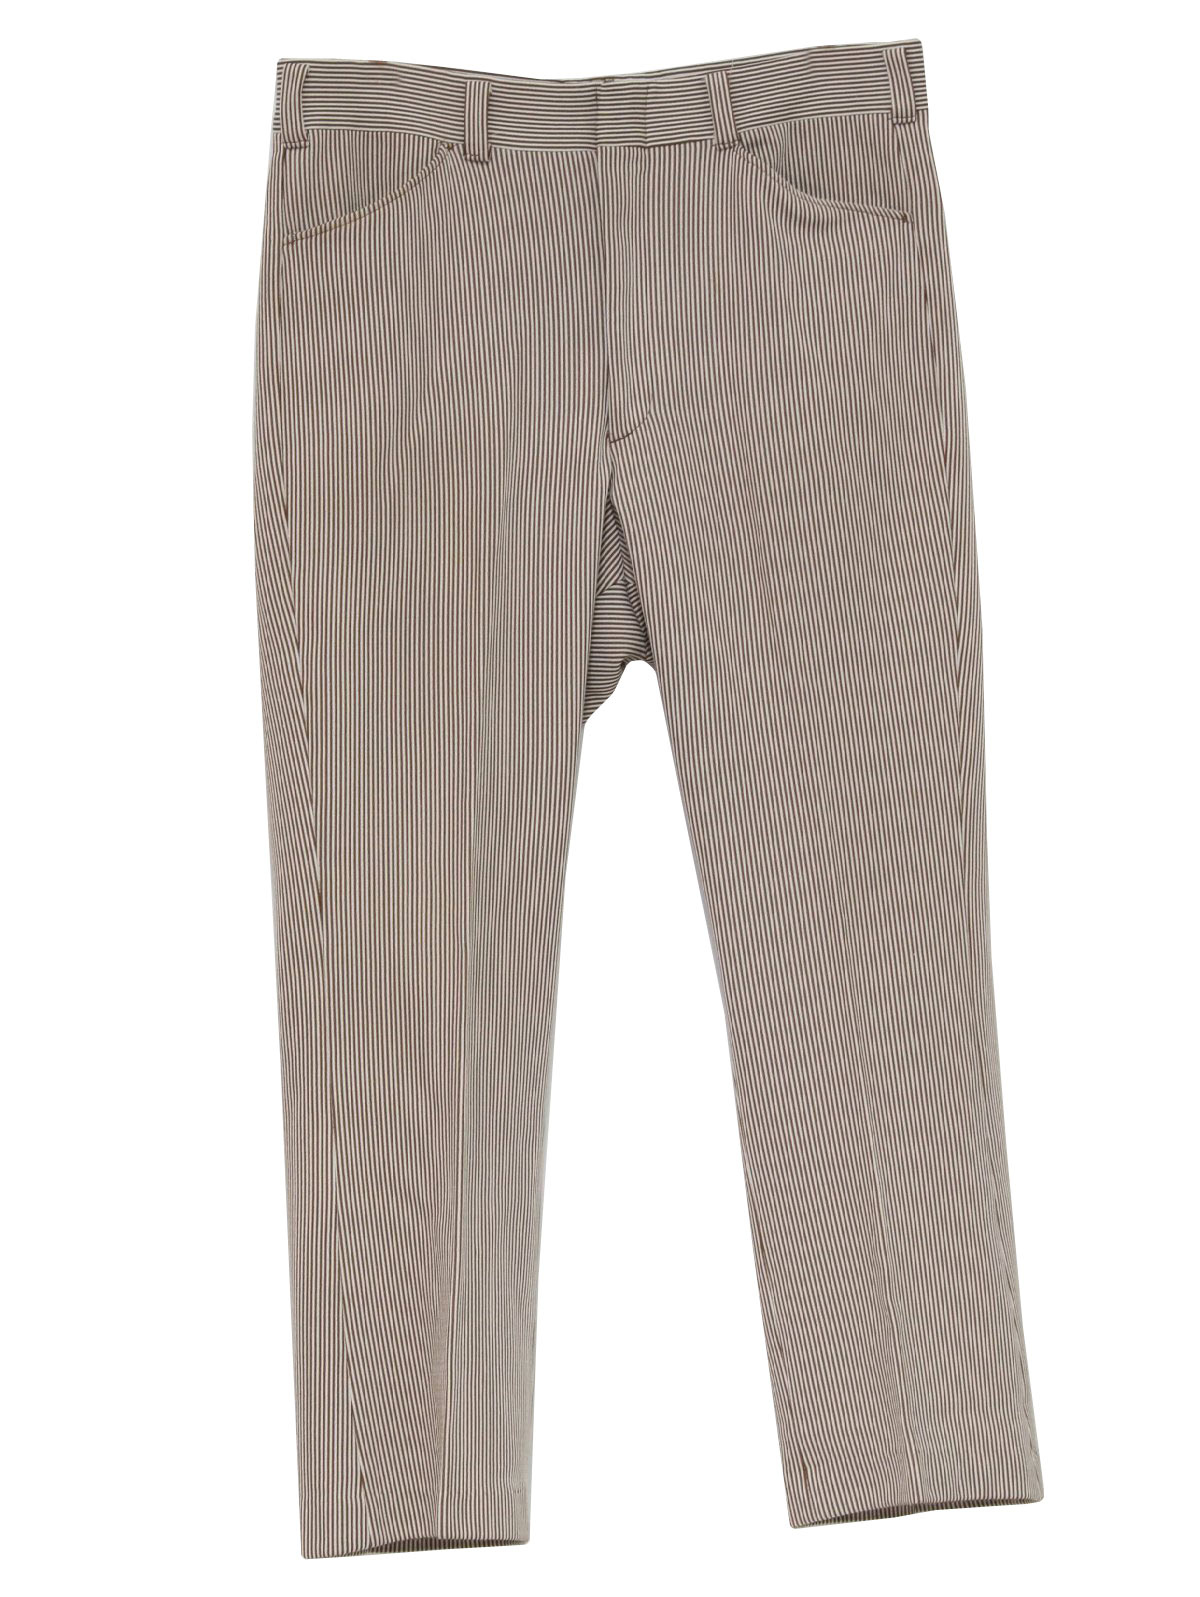 1970s Vintage Flared Pants / Flares: 70s -Unreadable Label- Mens brown ...